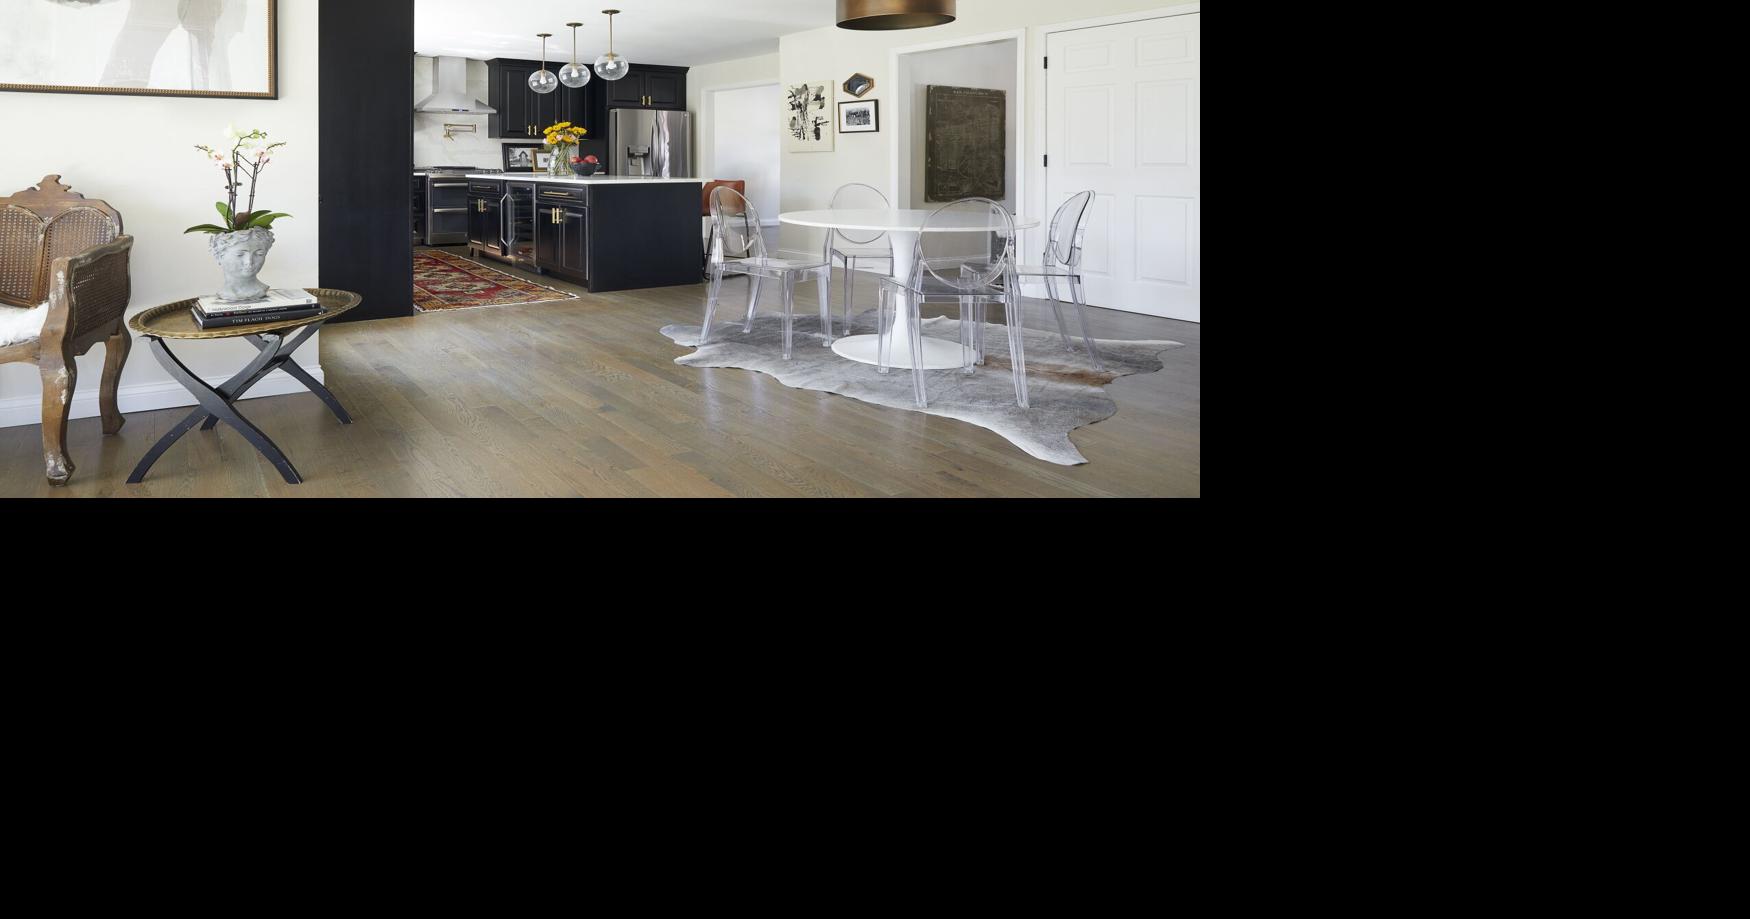 Black and white punctuate Oakland home’s interior design | Home & Garden